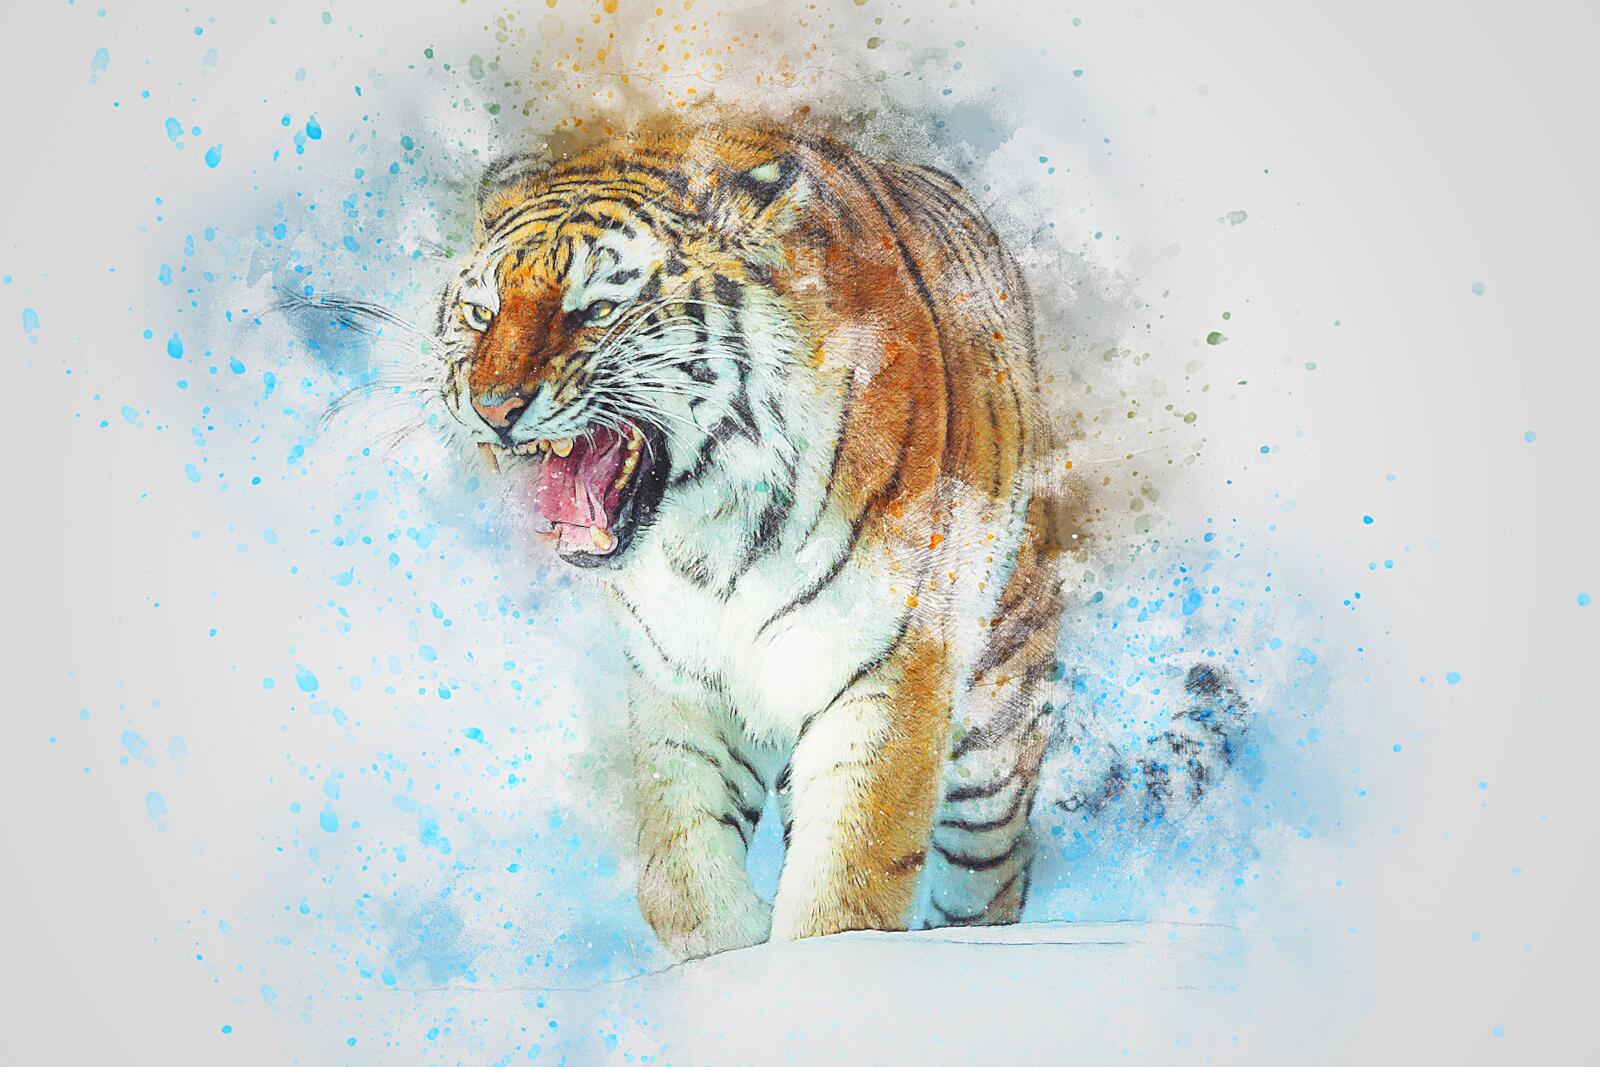 Wallpapers predator tiger art on the desktop